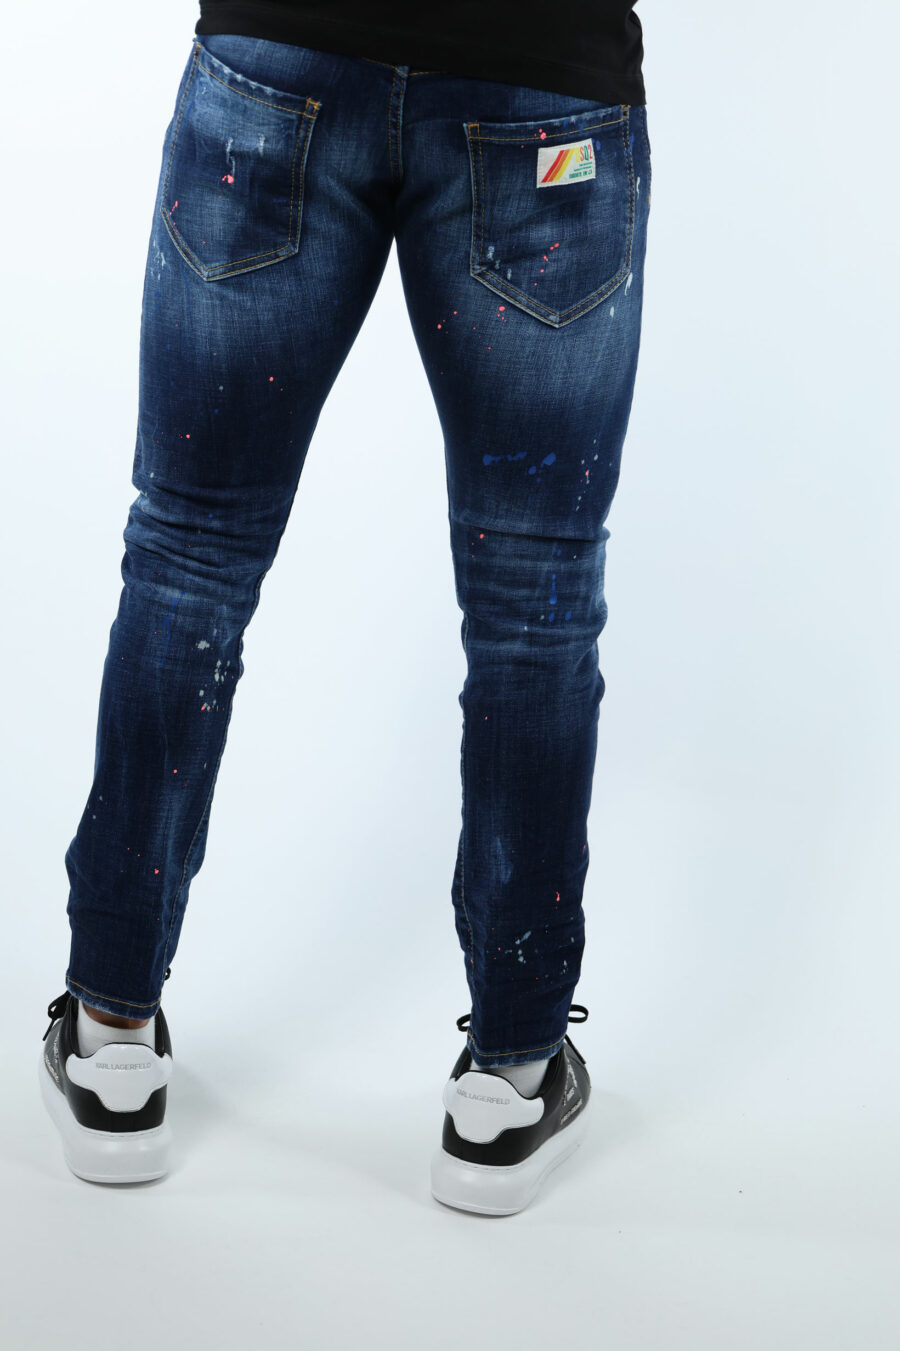 Blue "sexy twist jean" jeans worn with orange paint - 106918